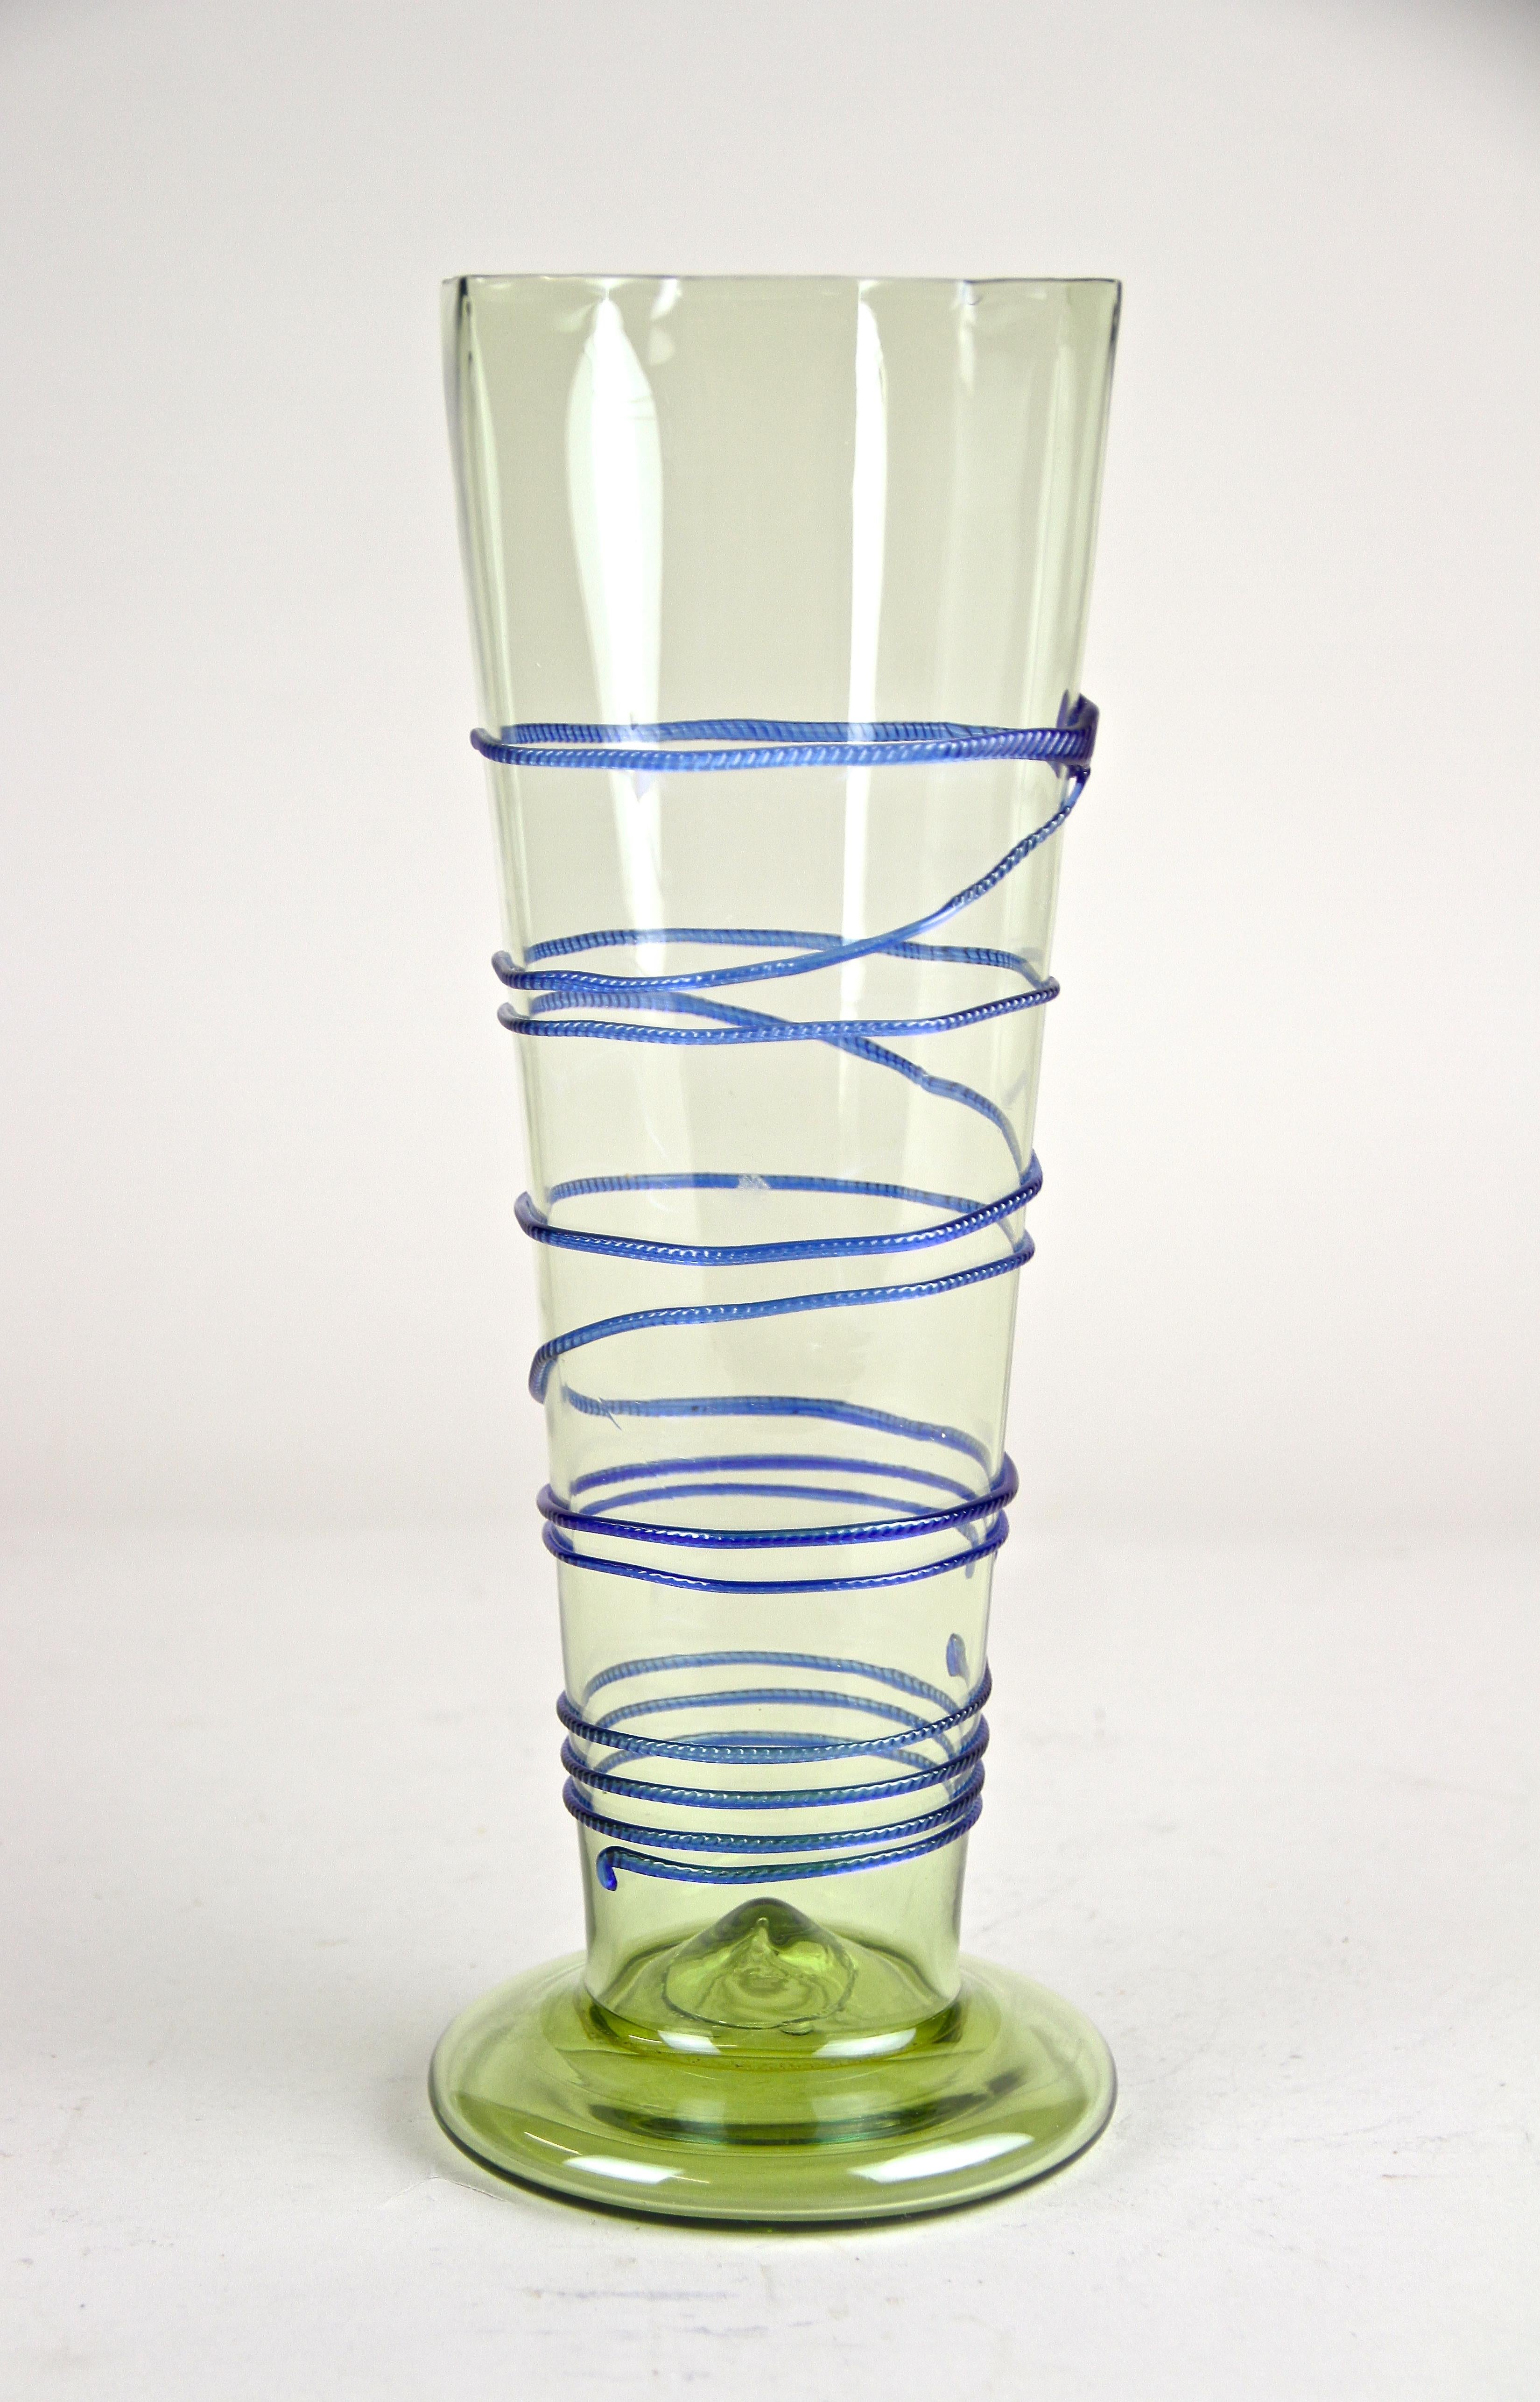 20th Century Art Nouveau Glass Vase with Blue Glass Thread, Austria, circa 1900